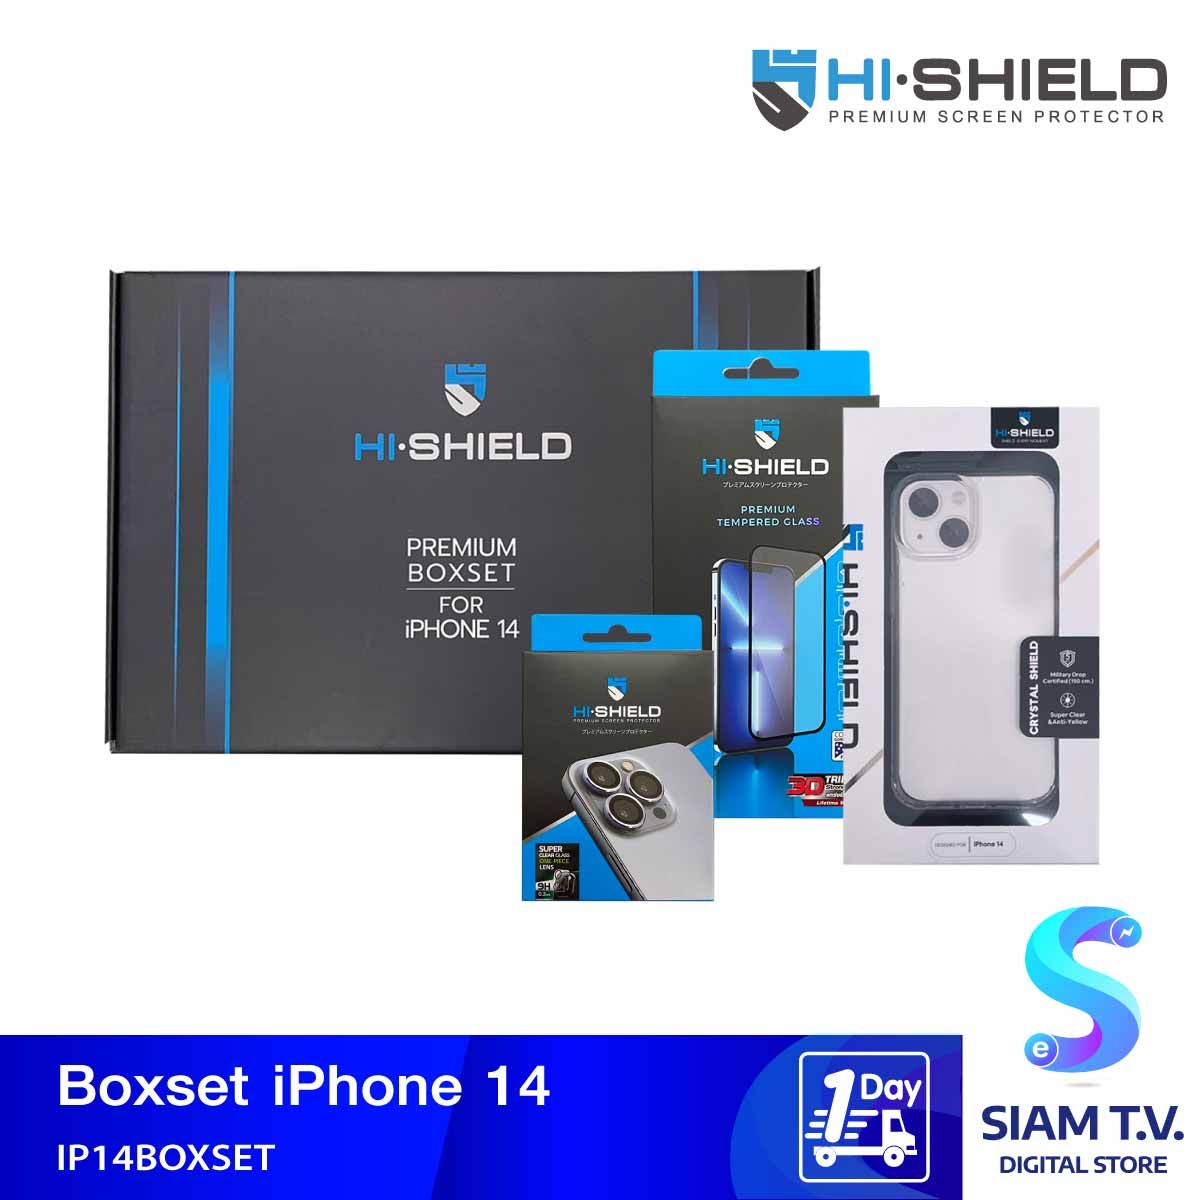 HI-SHIELD Box Set iPhone14